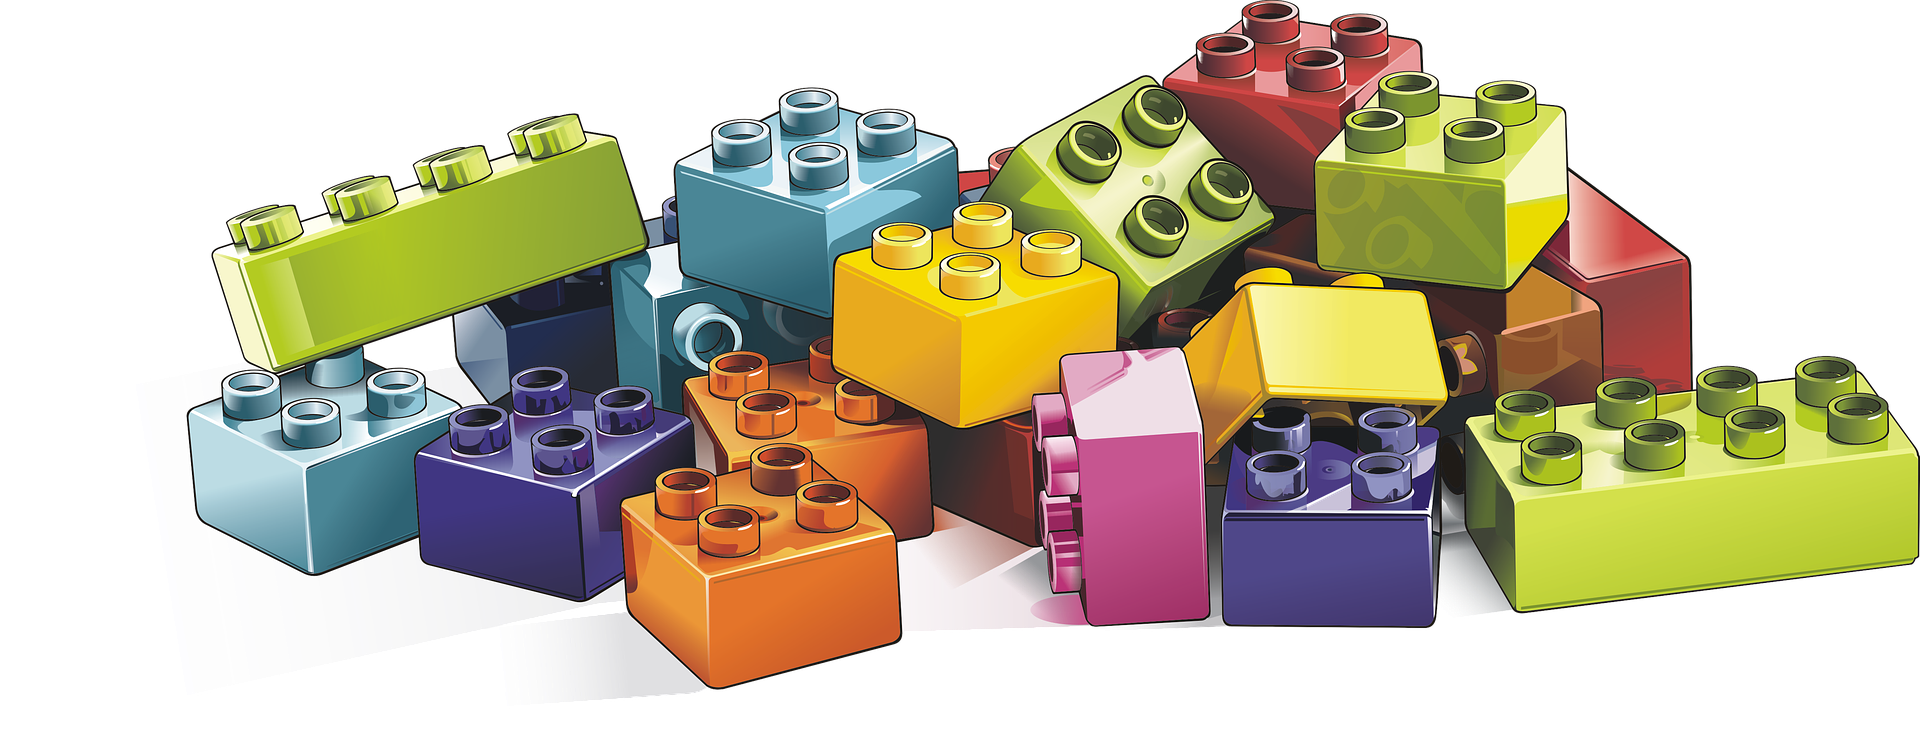 Illustration of multicolored LEGO bricks